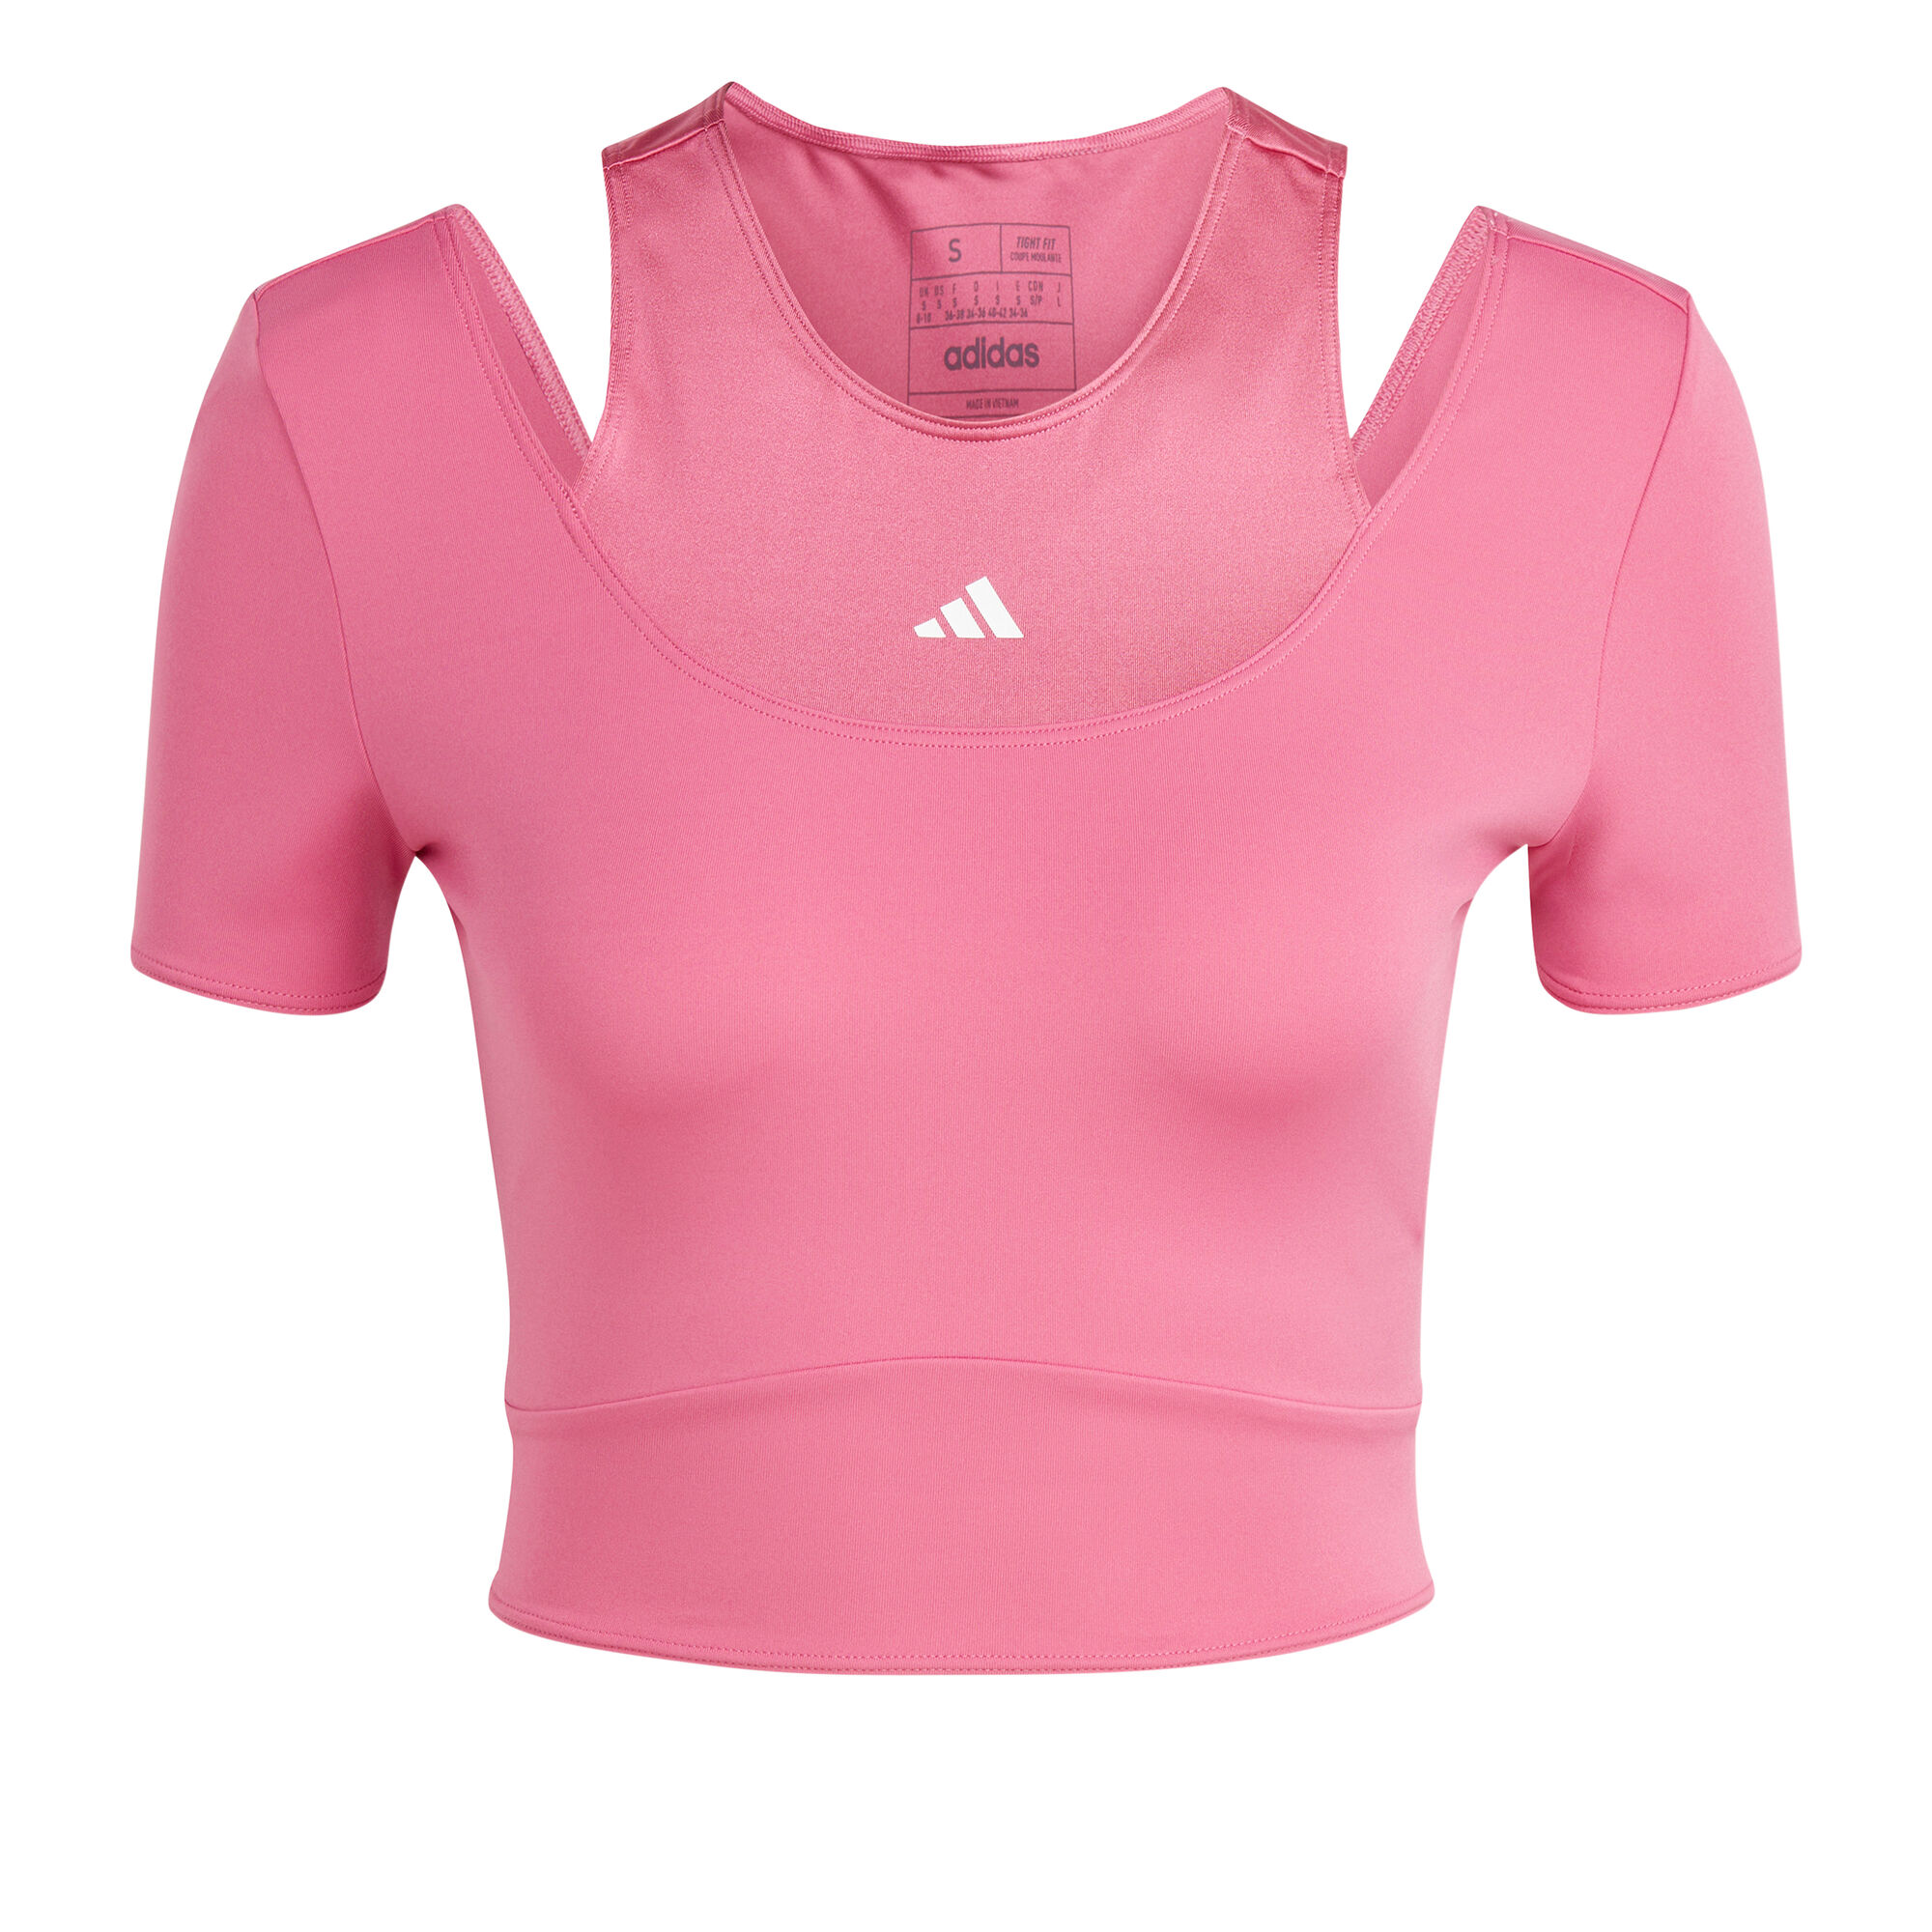 Buy adidas Training HIIT AEROREADY Crop Training T-Shirt Women Pink online